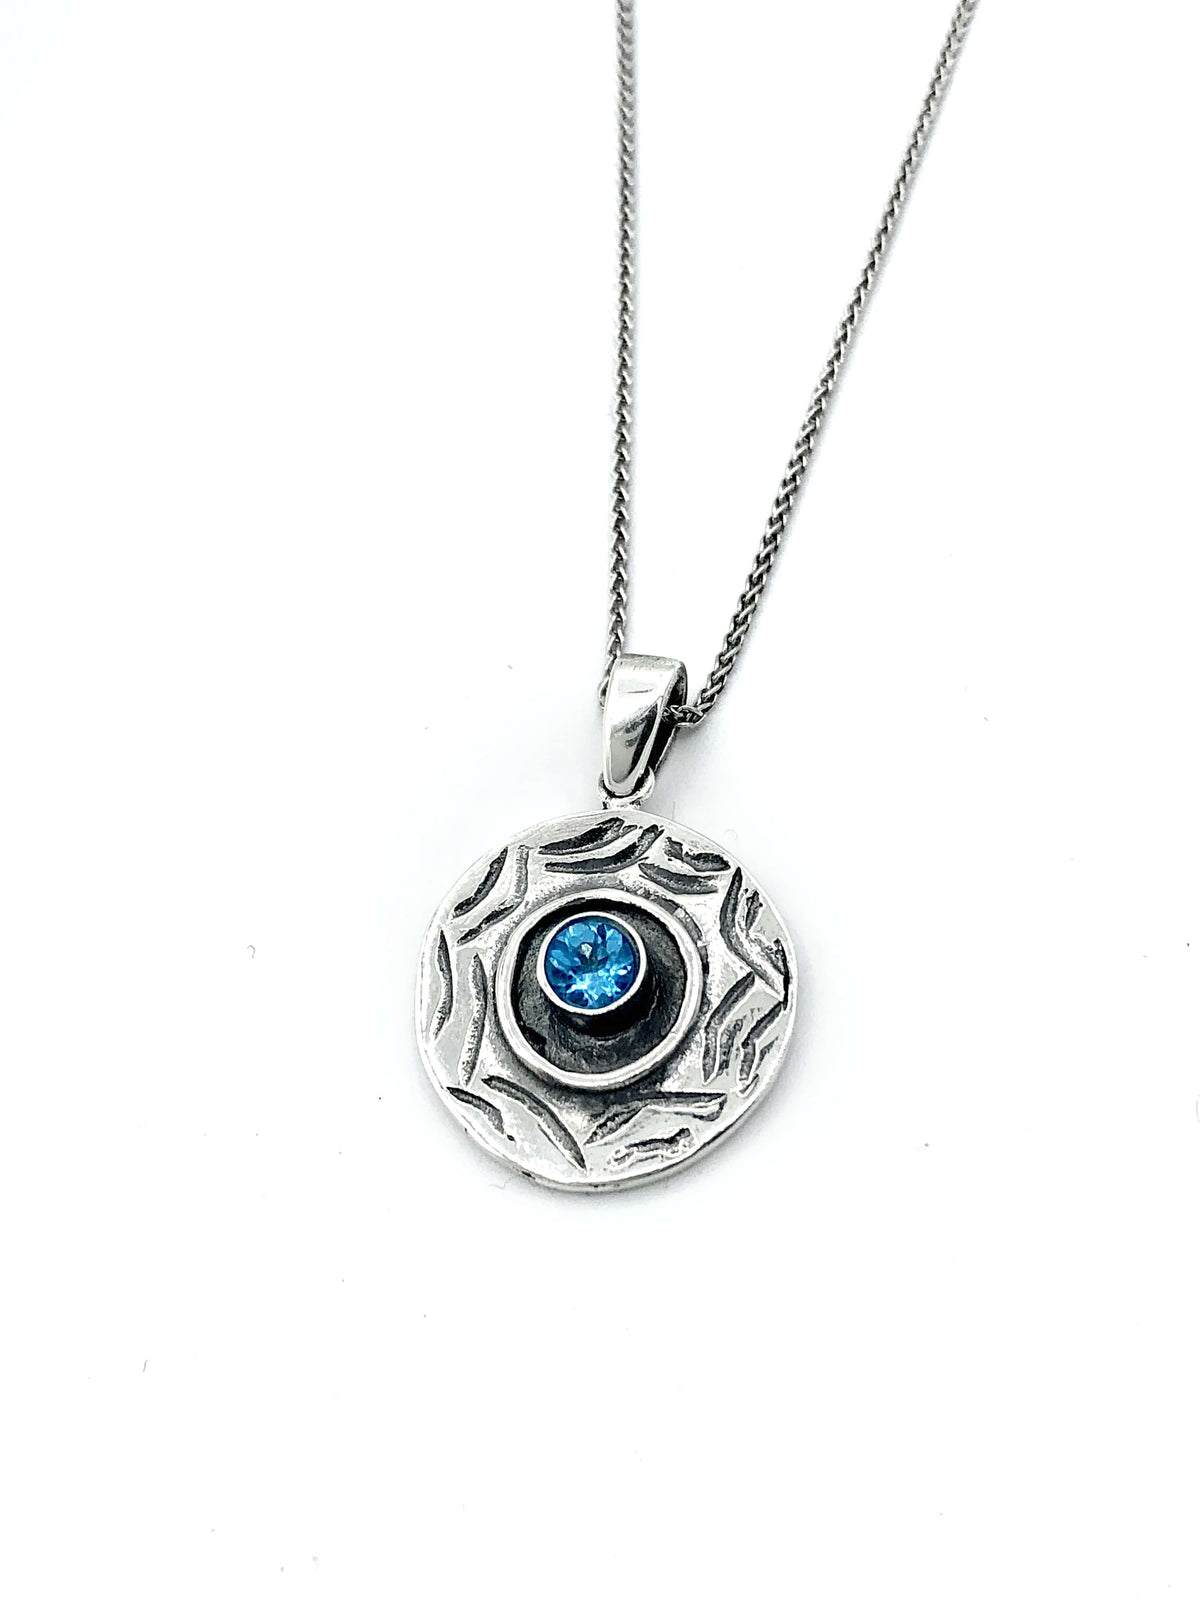 Evil eye pendant, blue topaz stone, evil eye circle pendant silver chain 